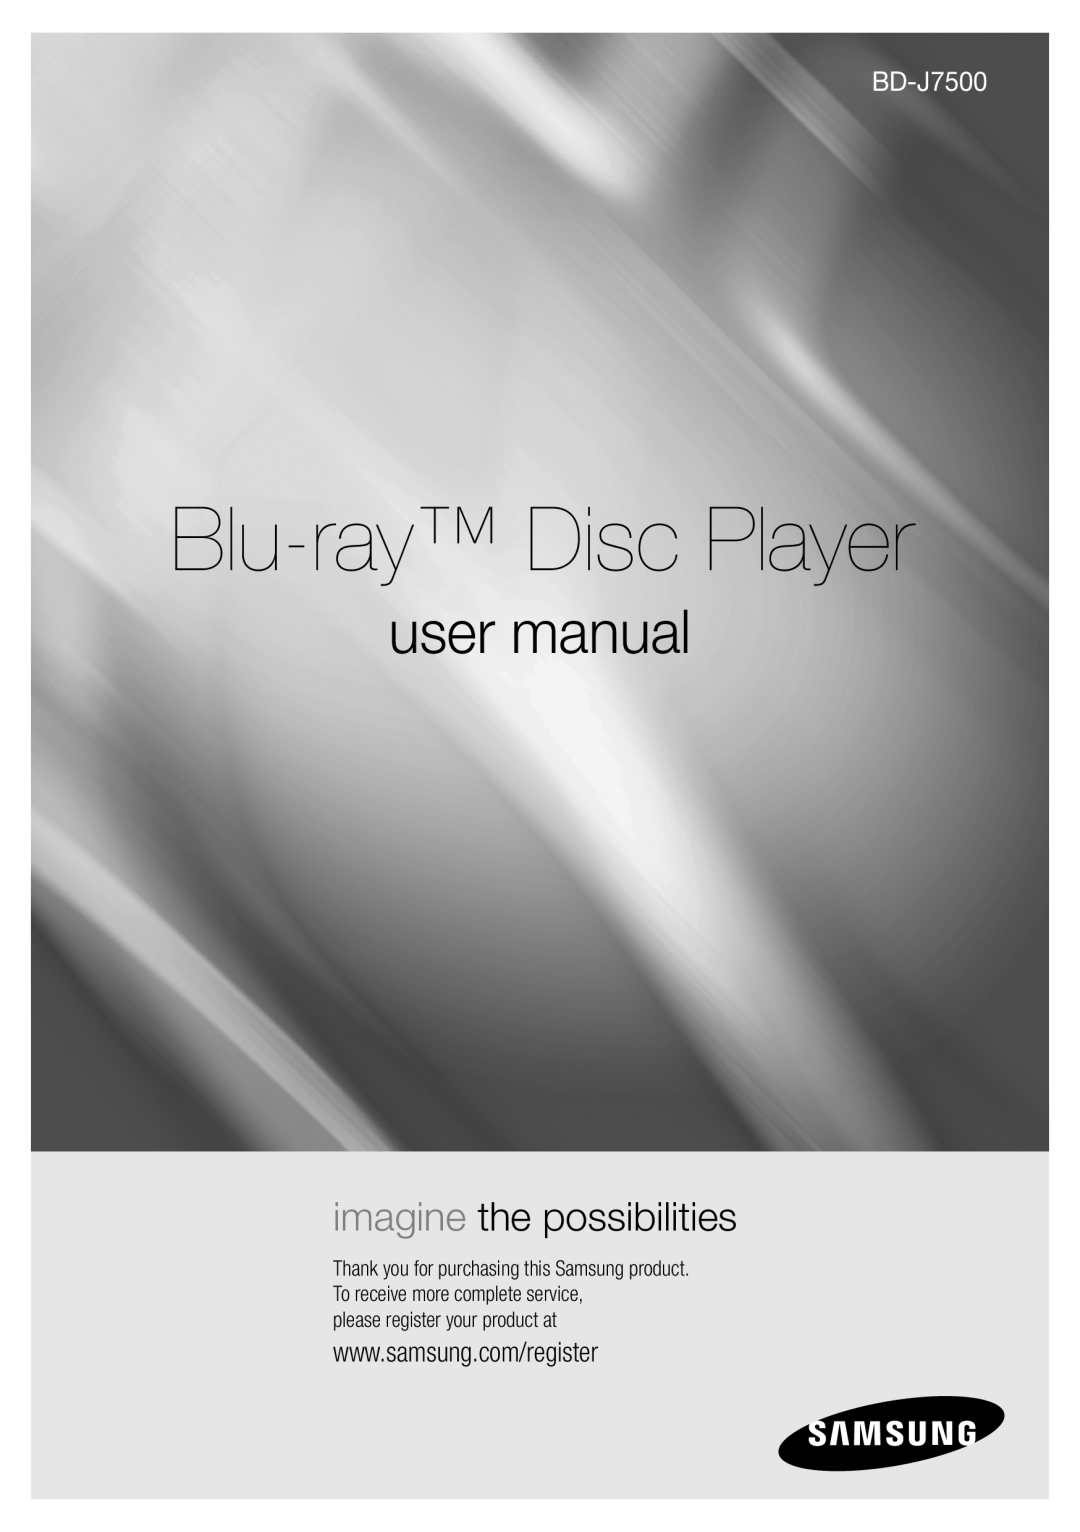 Samsung BD-J7500/EN manual Blu-ray Disc Player, user manual, imagine the possibilities 